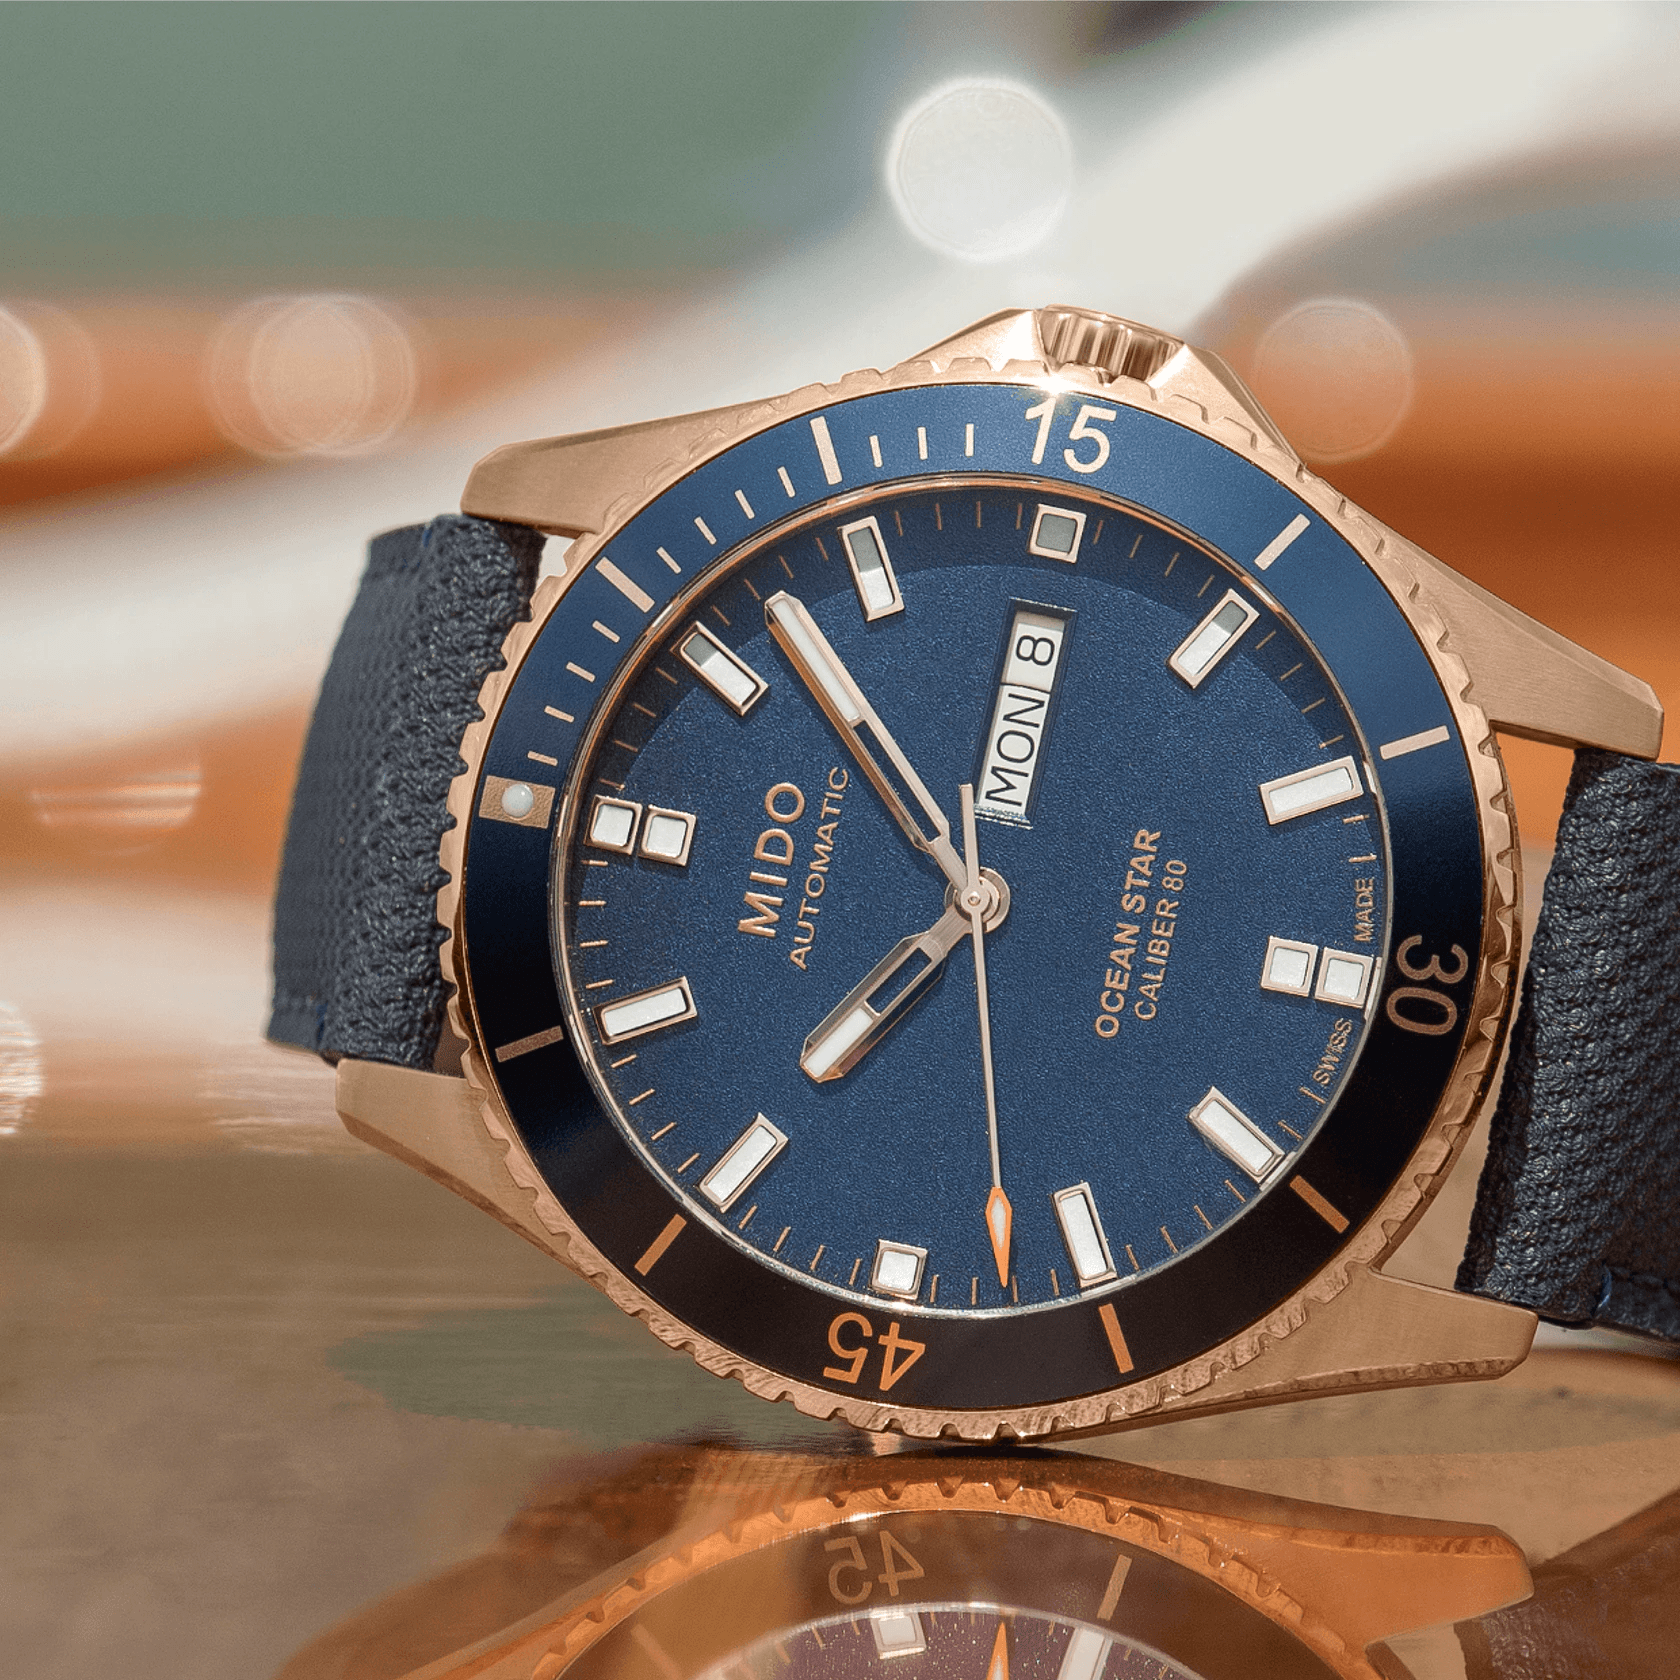 Mido Ocean Star 200 Rose Gold Blue Strap Men's Watch M0264303604100